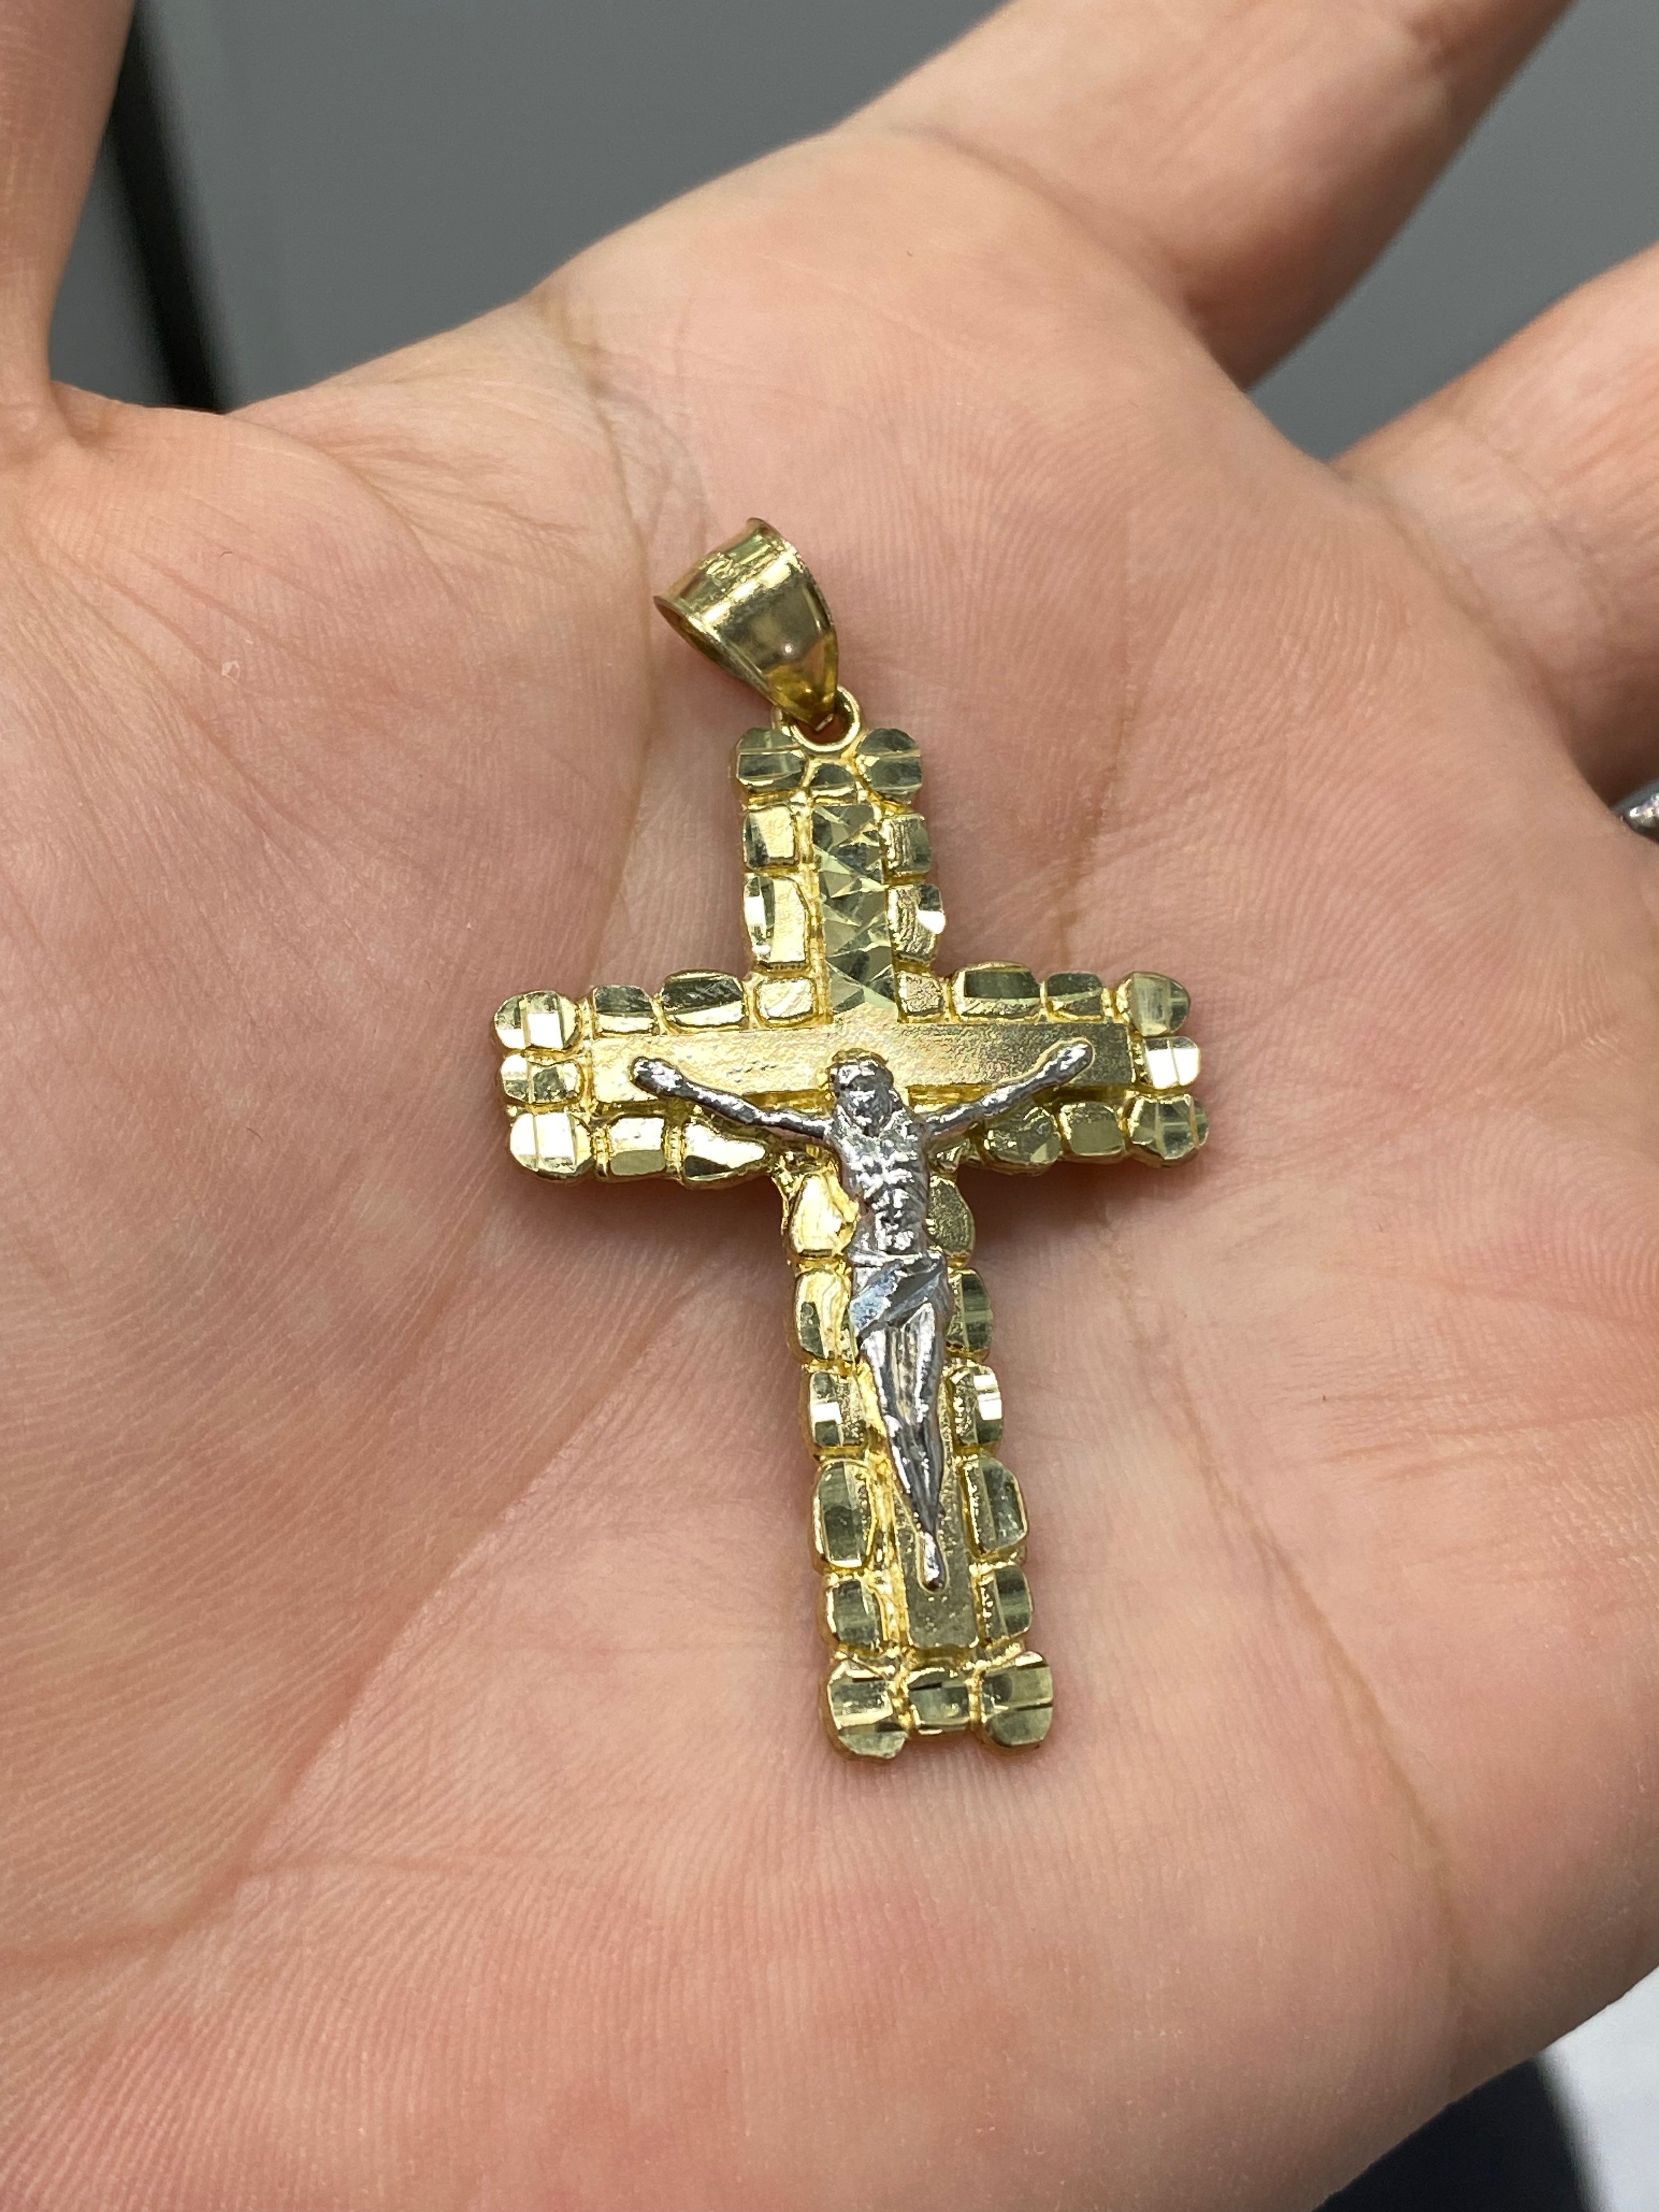 Stone Cross Jesus Pendant 10K Gold